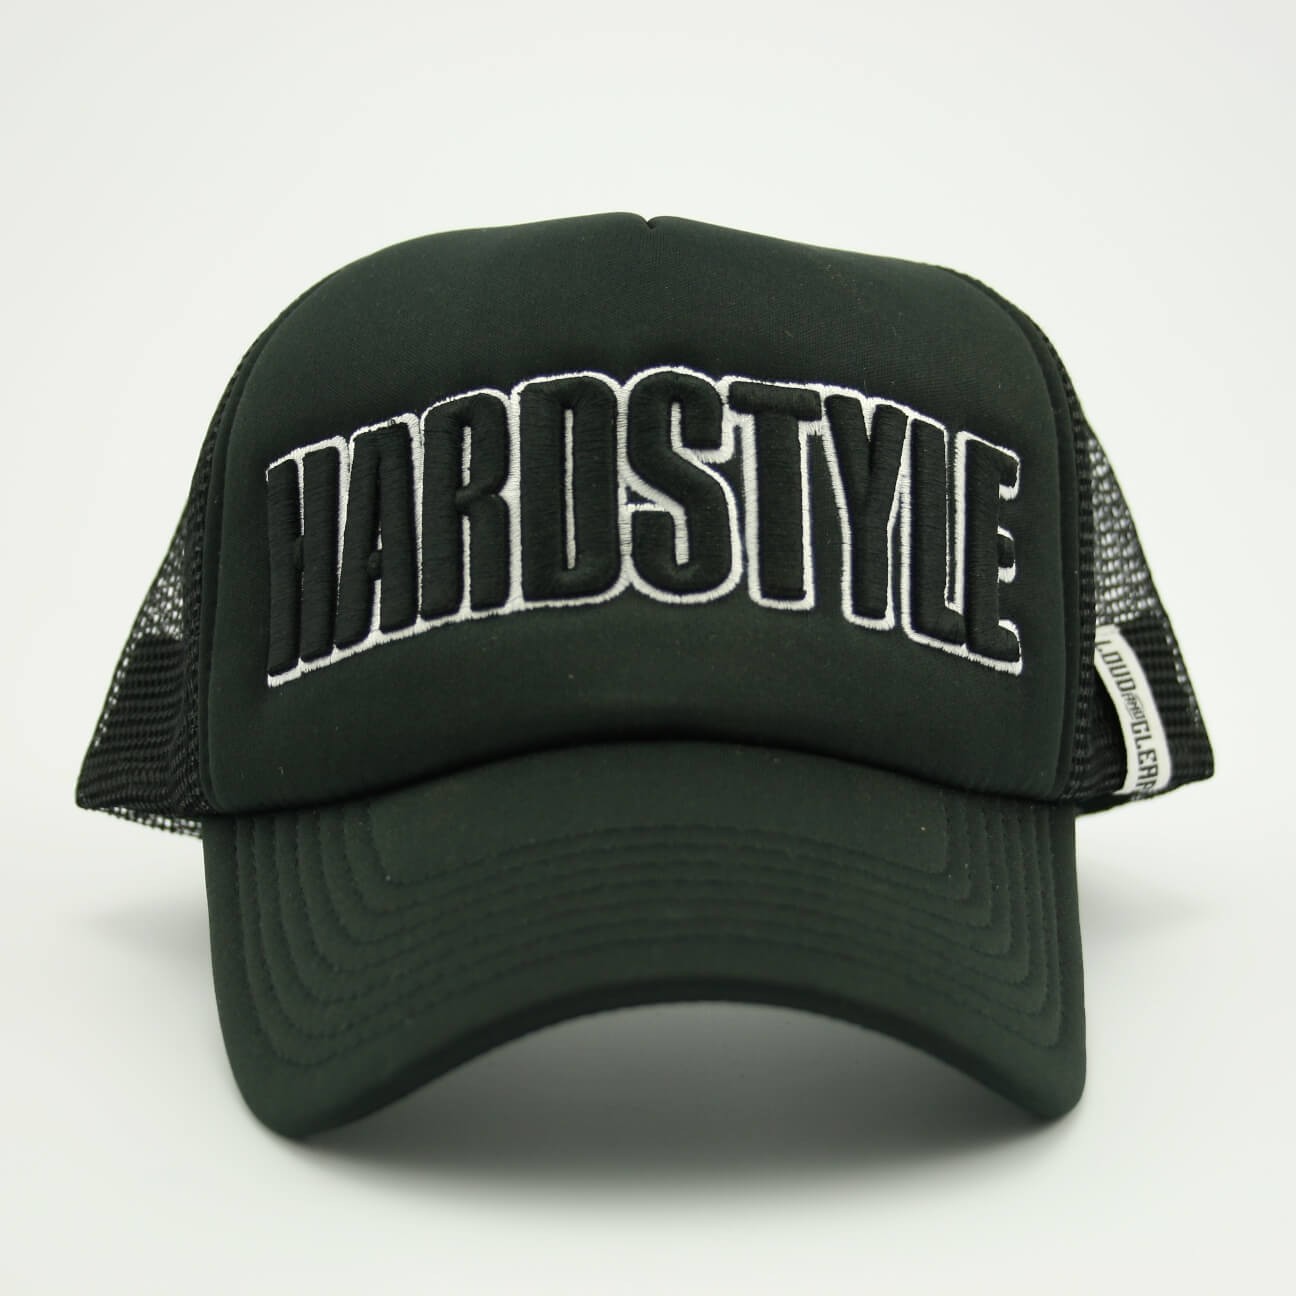 hardstyle trucker cap wit zwart